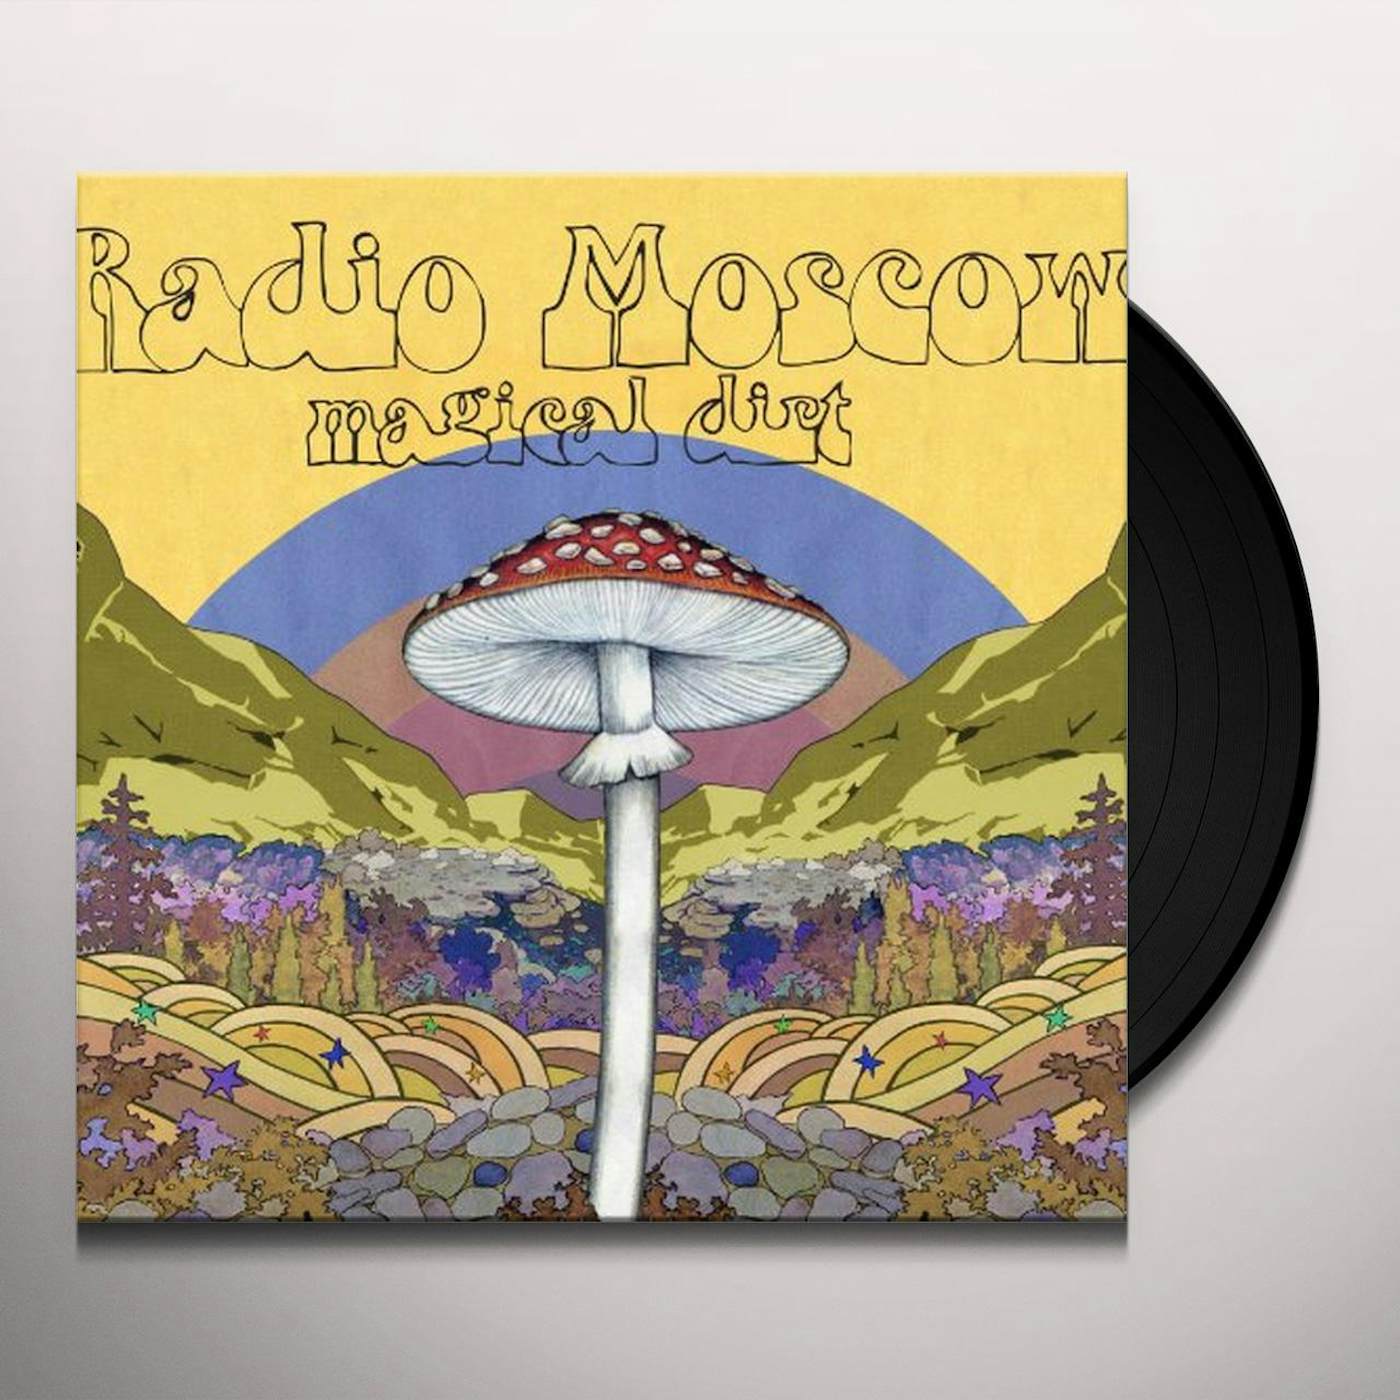 Radio Moscow Magical Dirt Vinyl Record